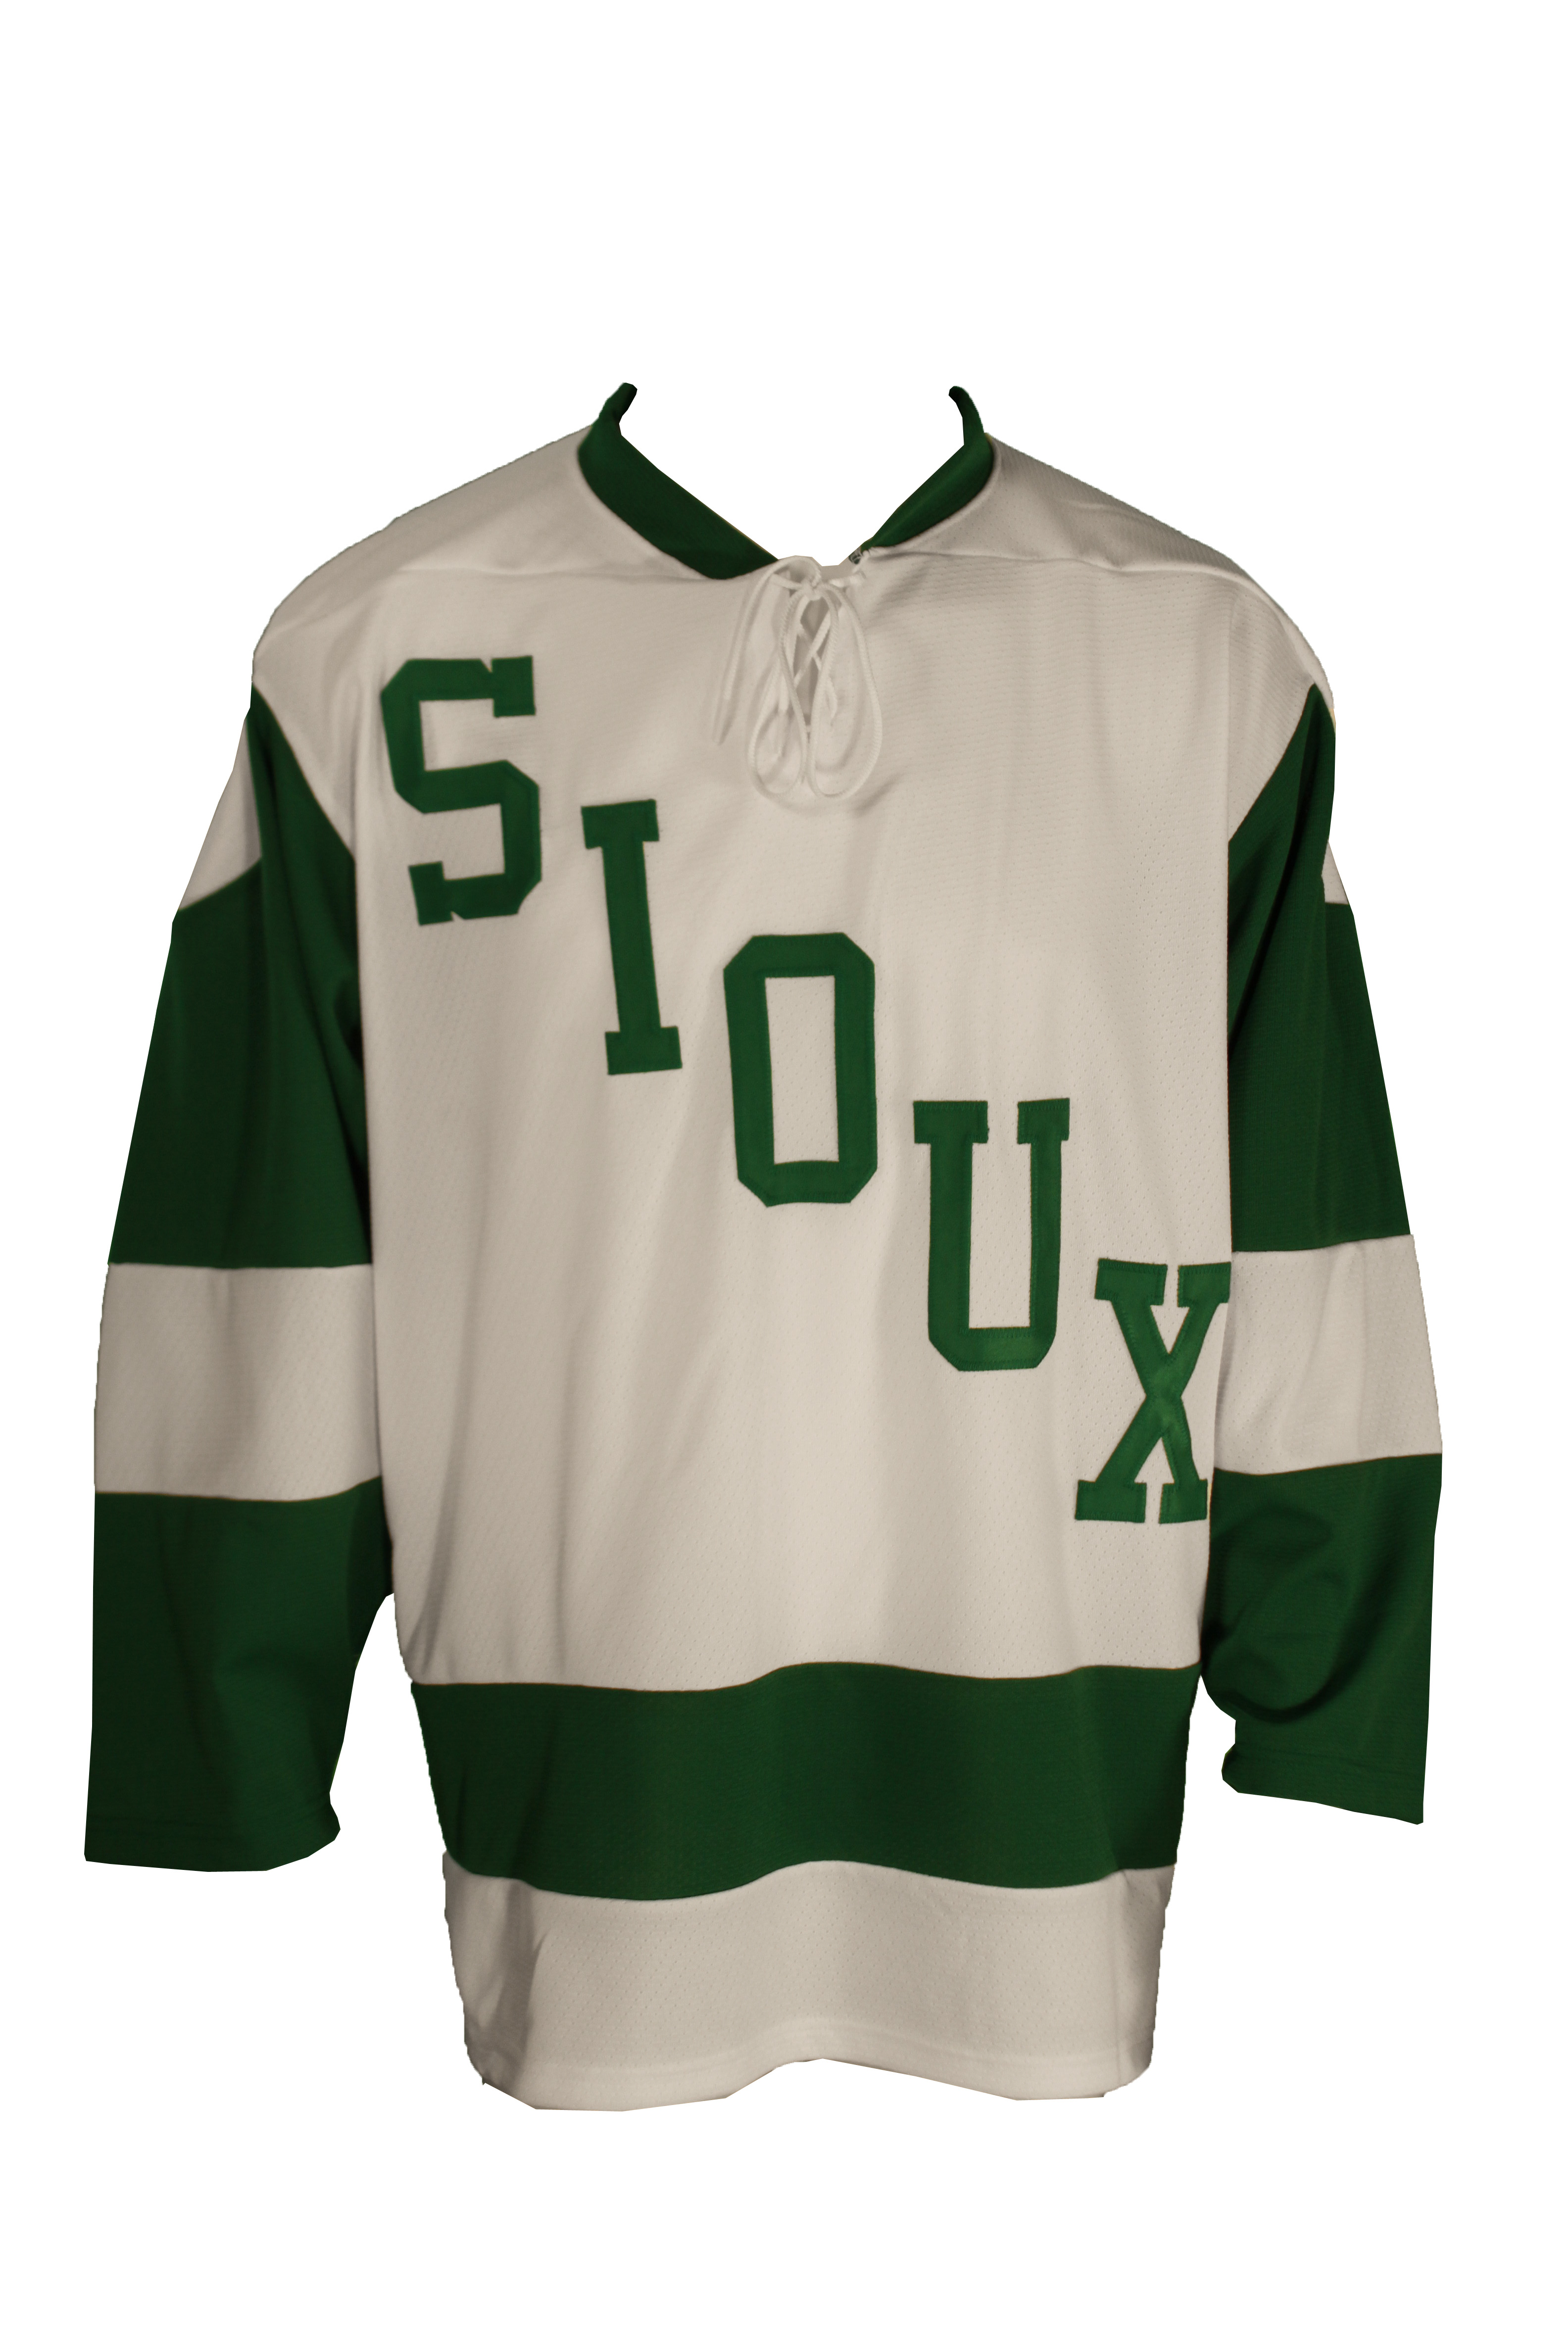 sioux jersey hockey